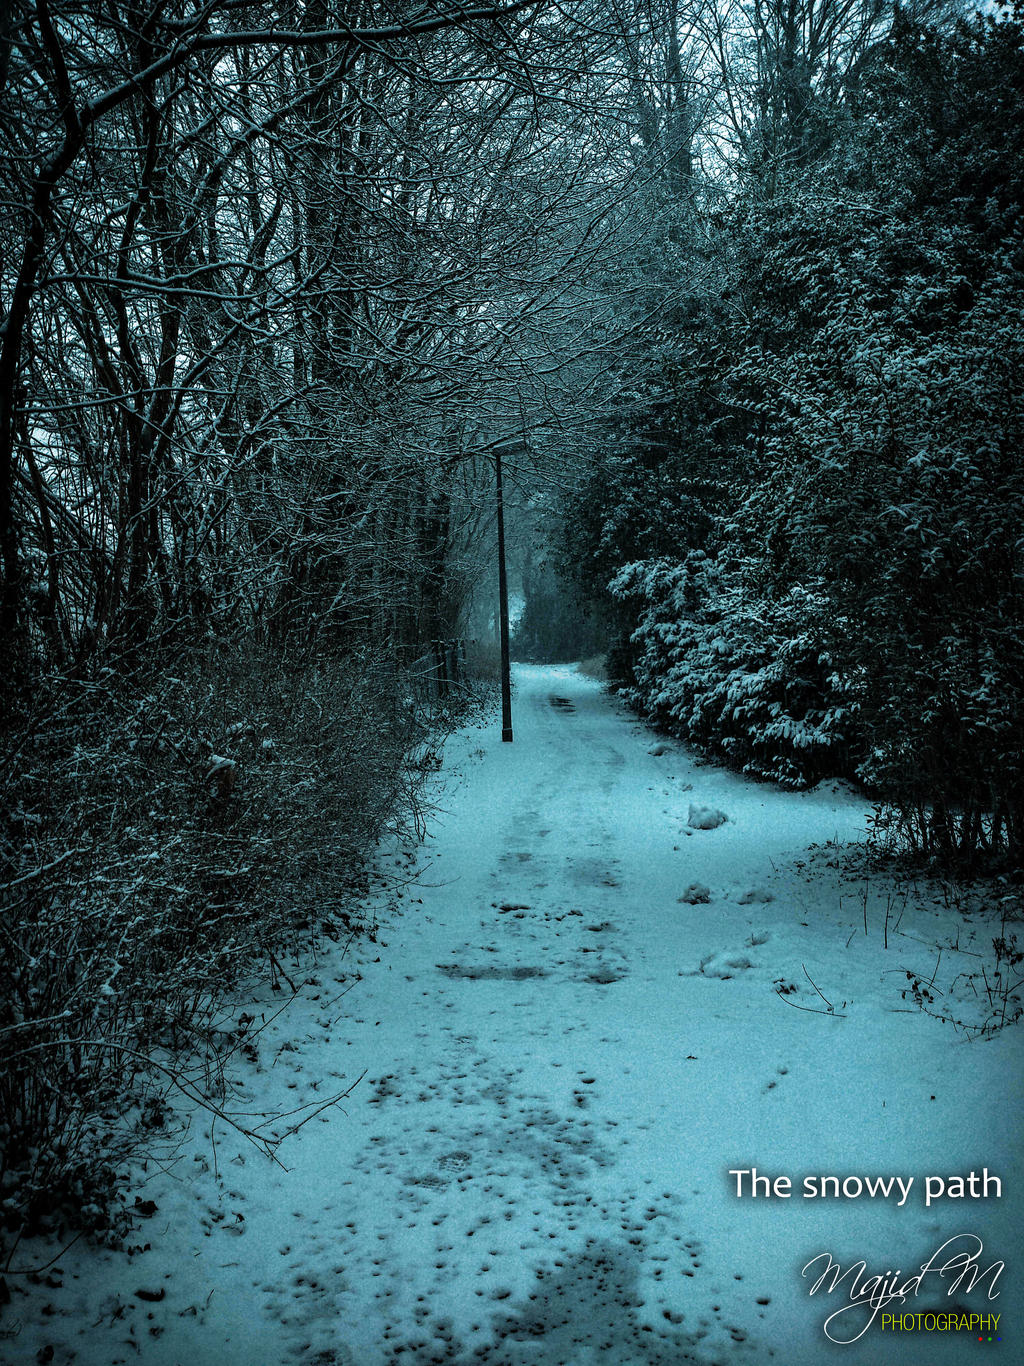 The snowy path